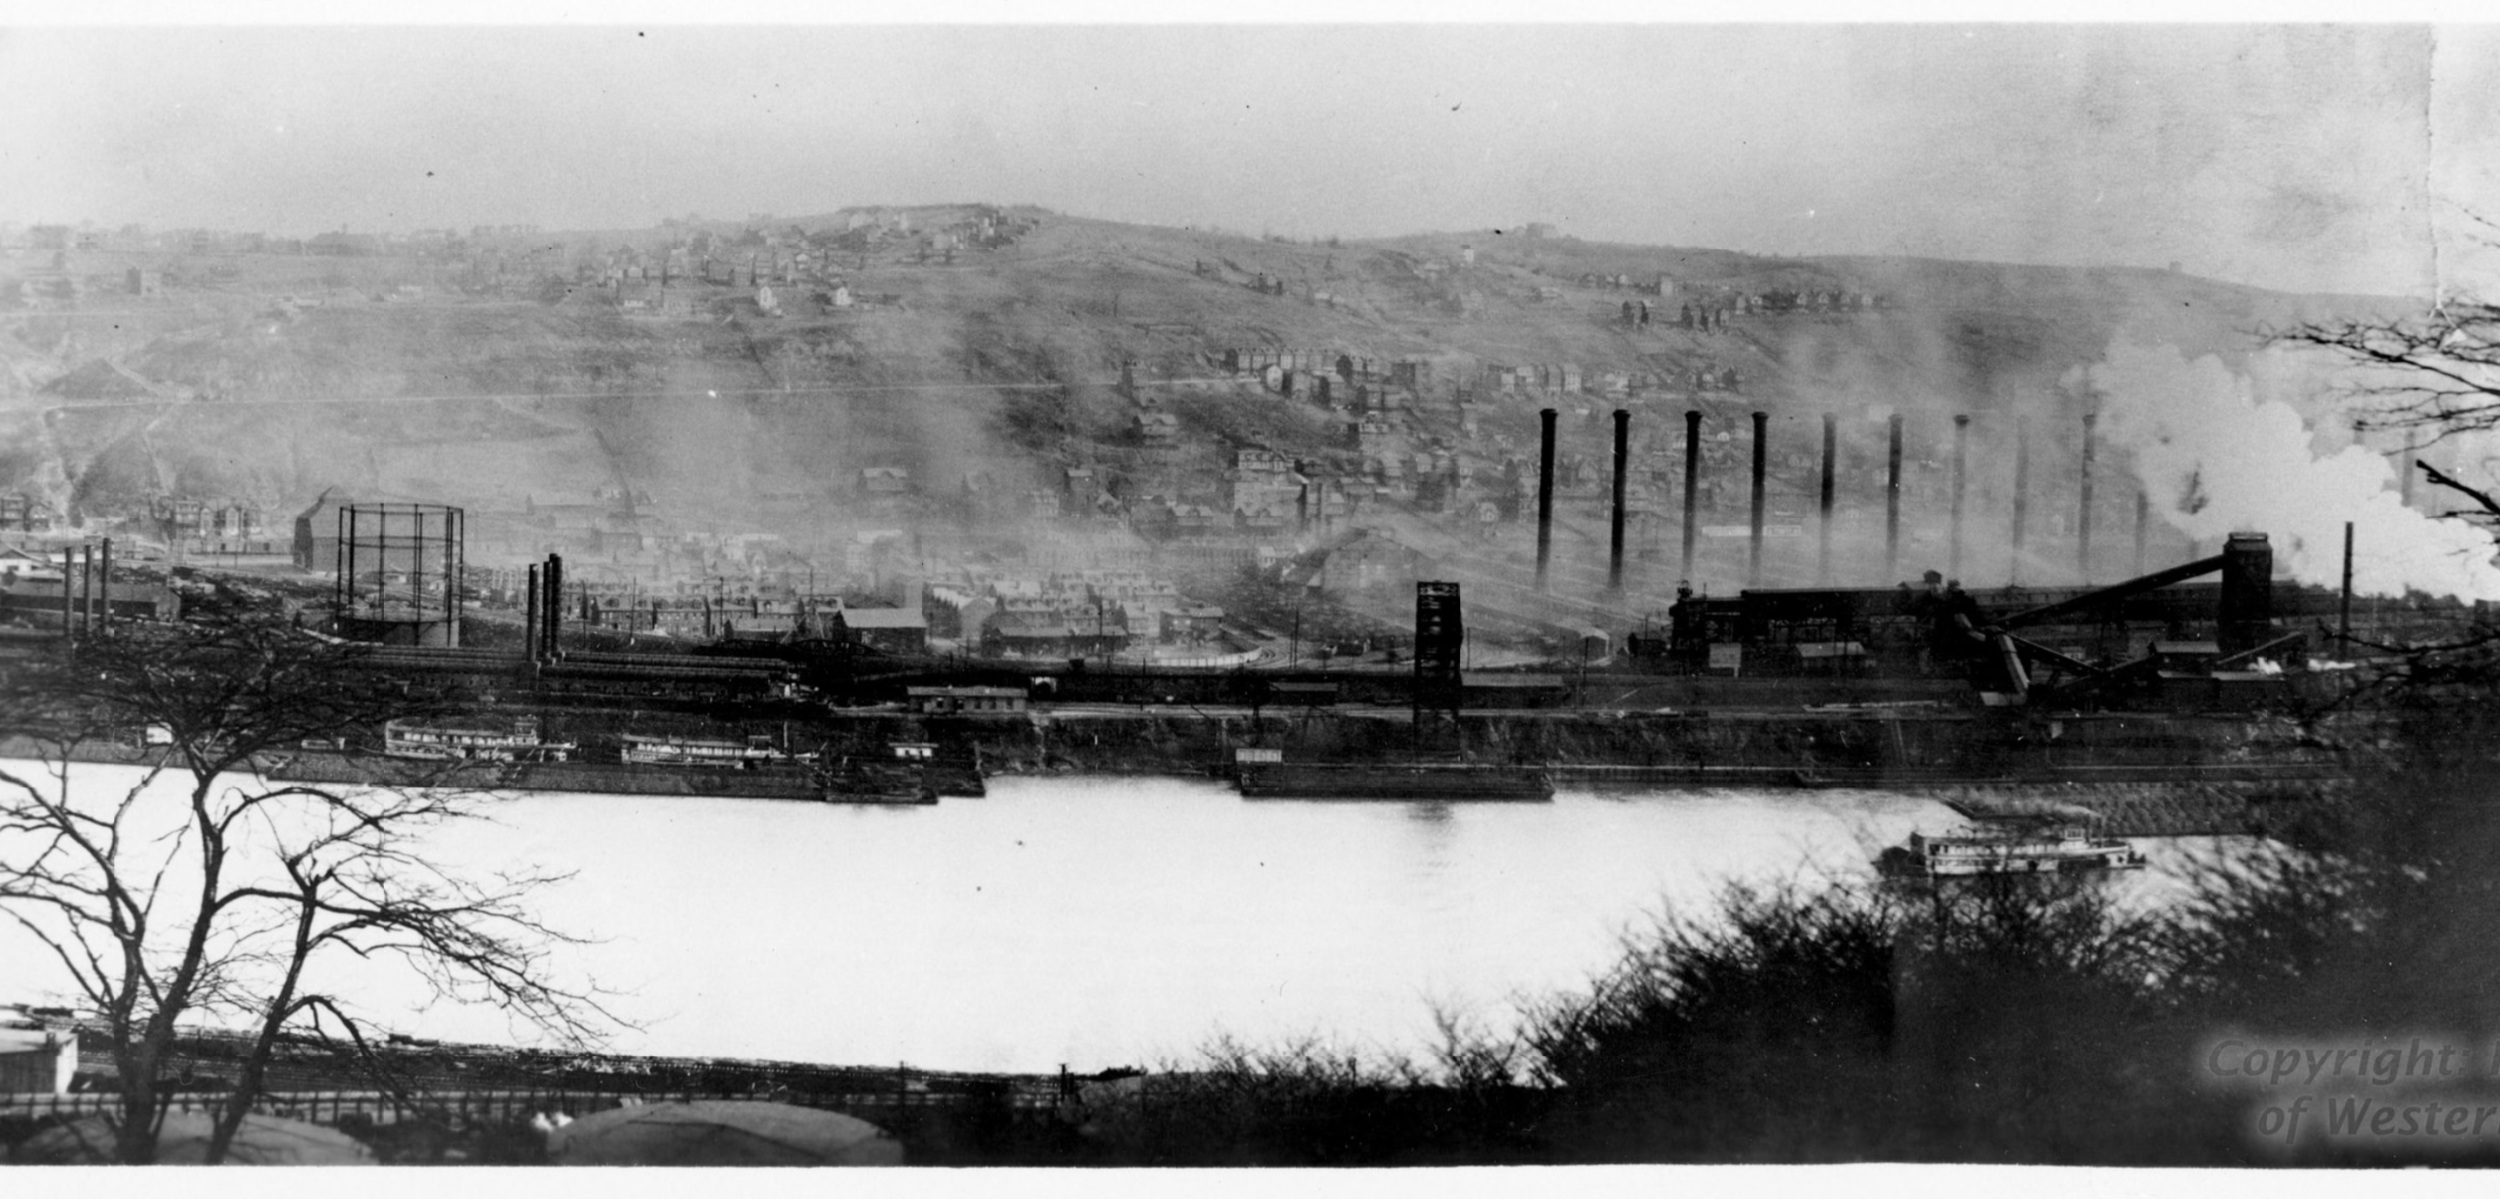 Jones &amp; Laughlin Steel Corporation Pittsburgh Works Source: Jones &amp; Laughlin Steel Corporation Photographs/Western Pennsylvania Historical Society